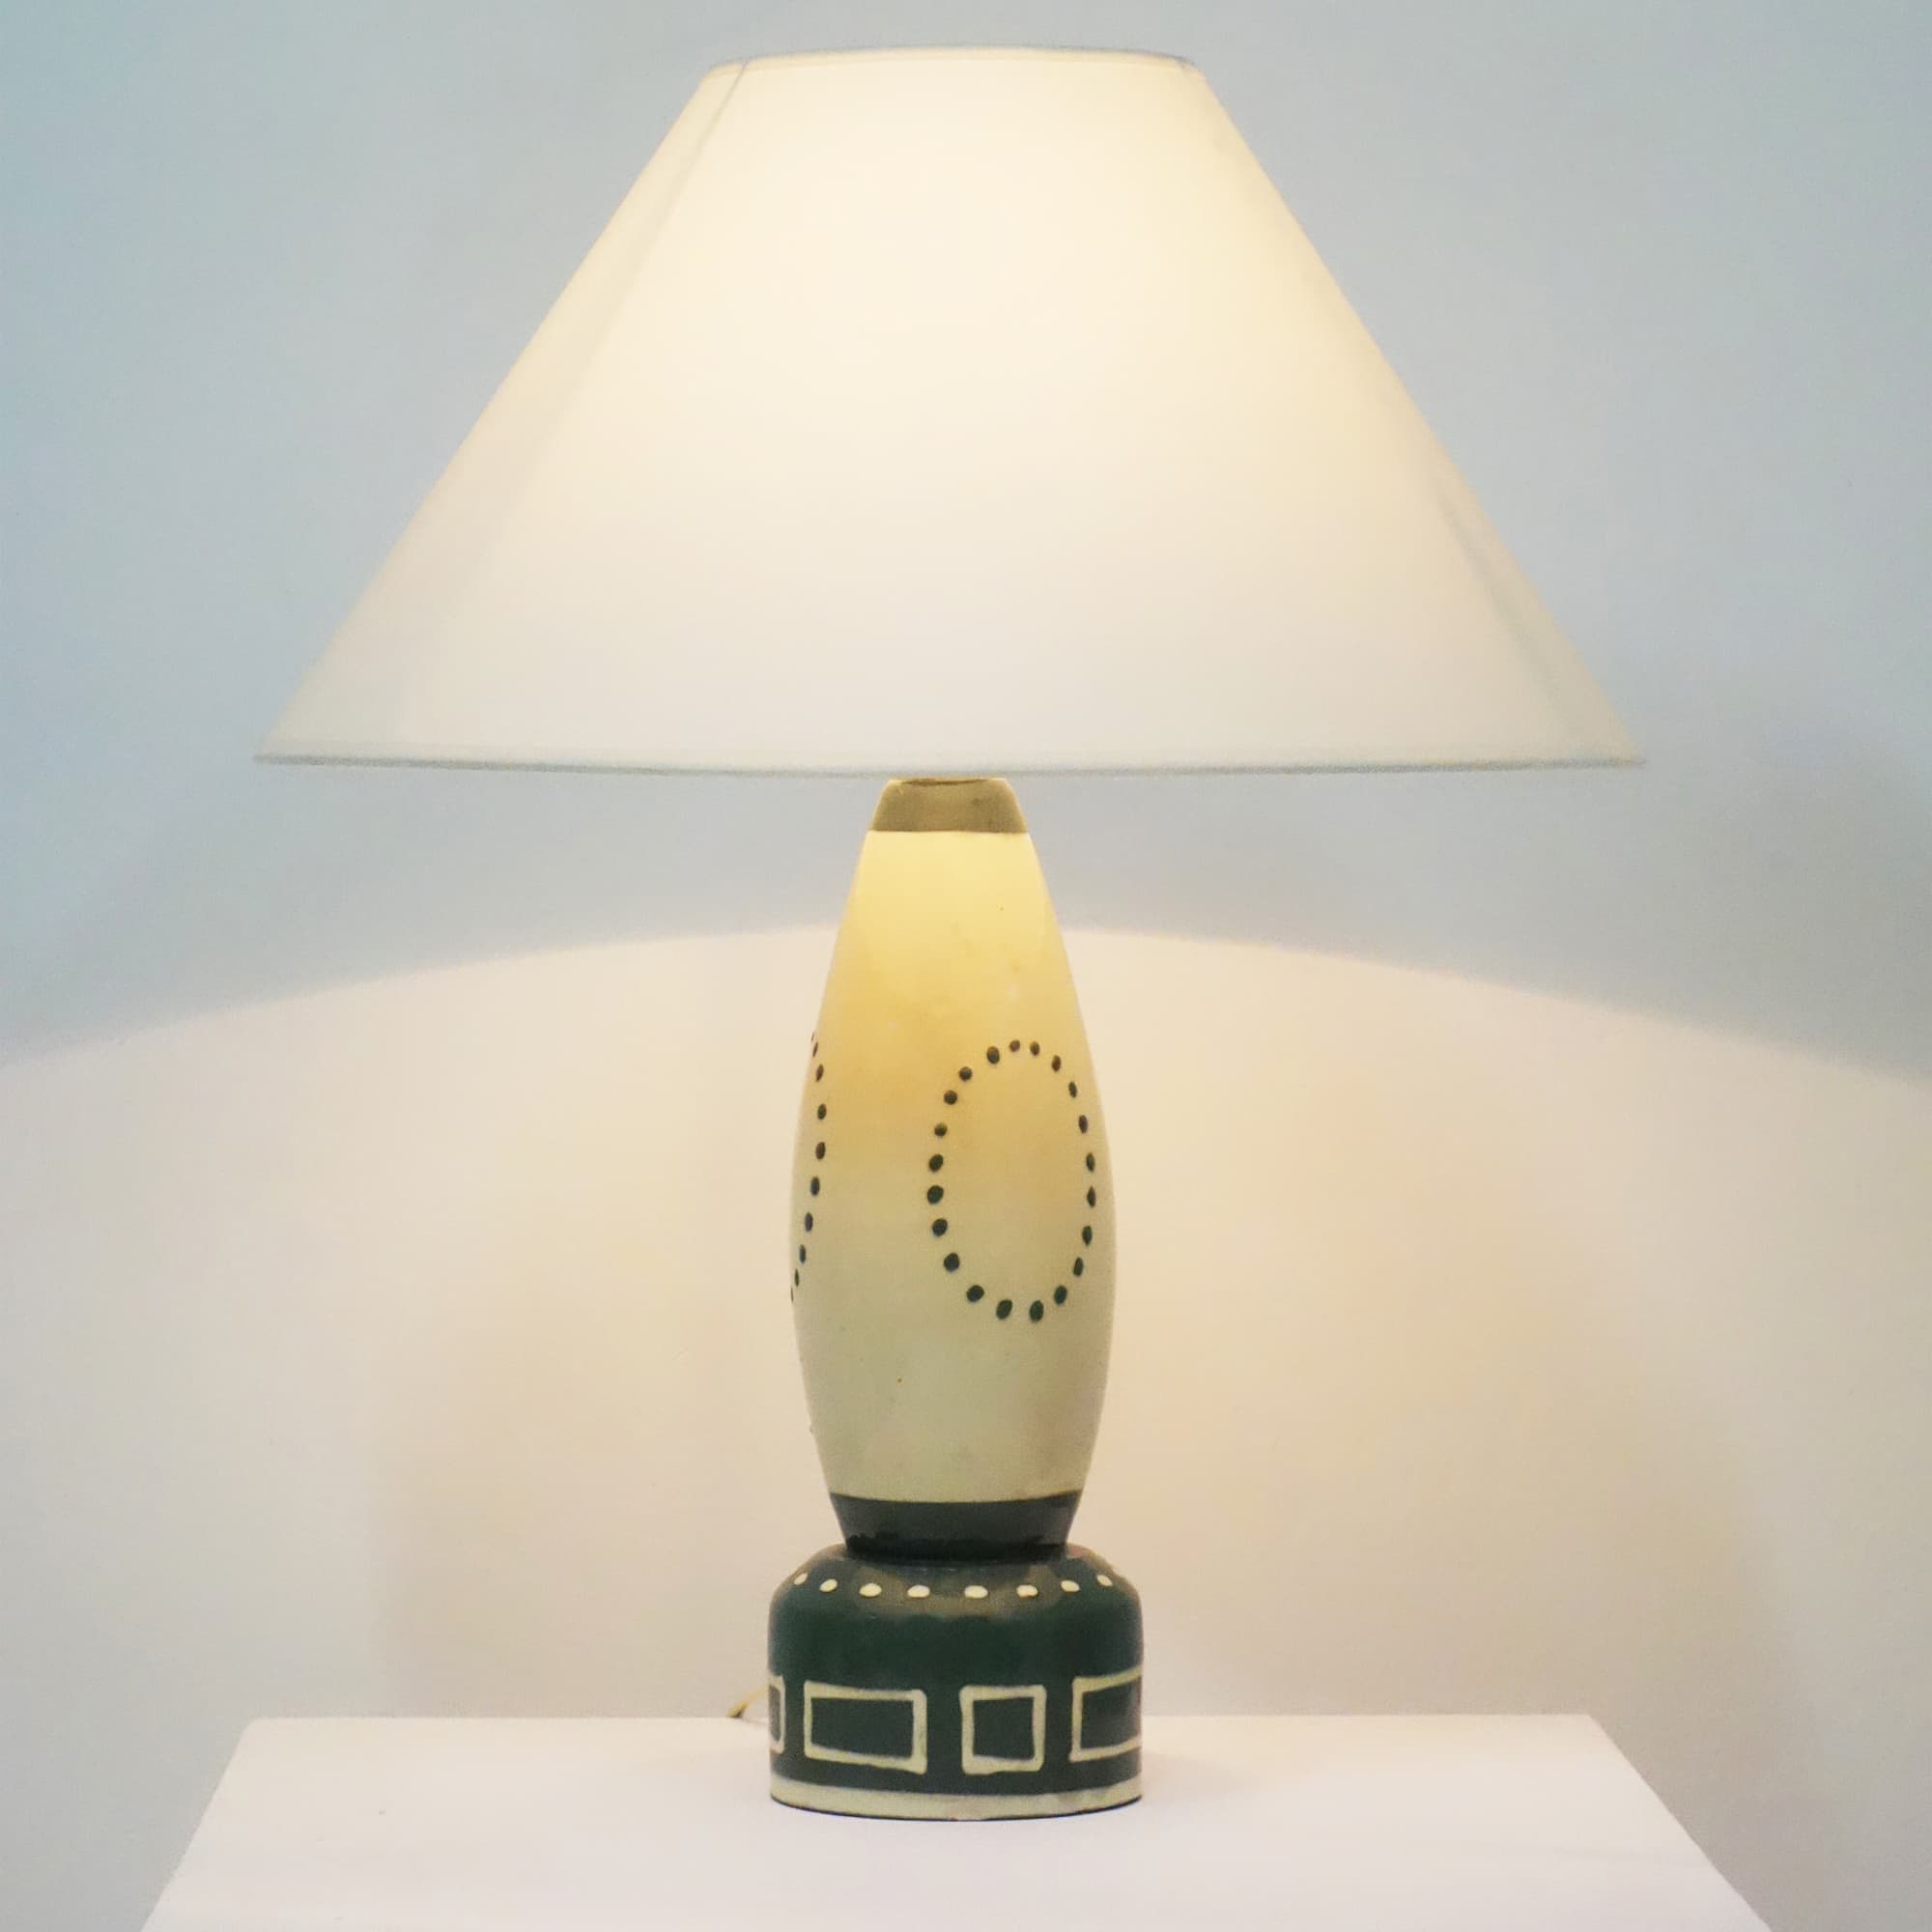 Francis Jourdain, Ceramic table lamp (sold), vue 03